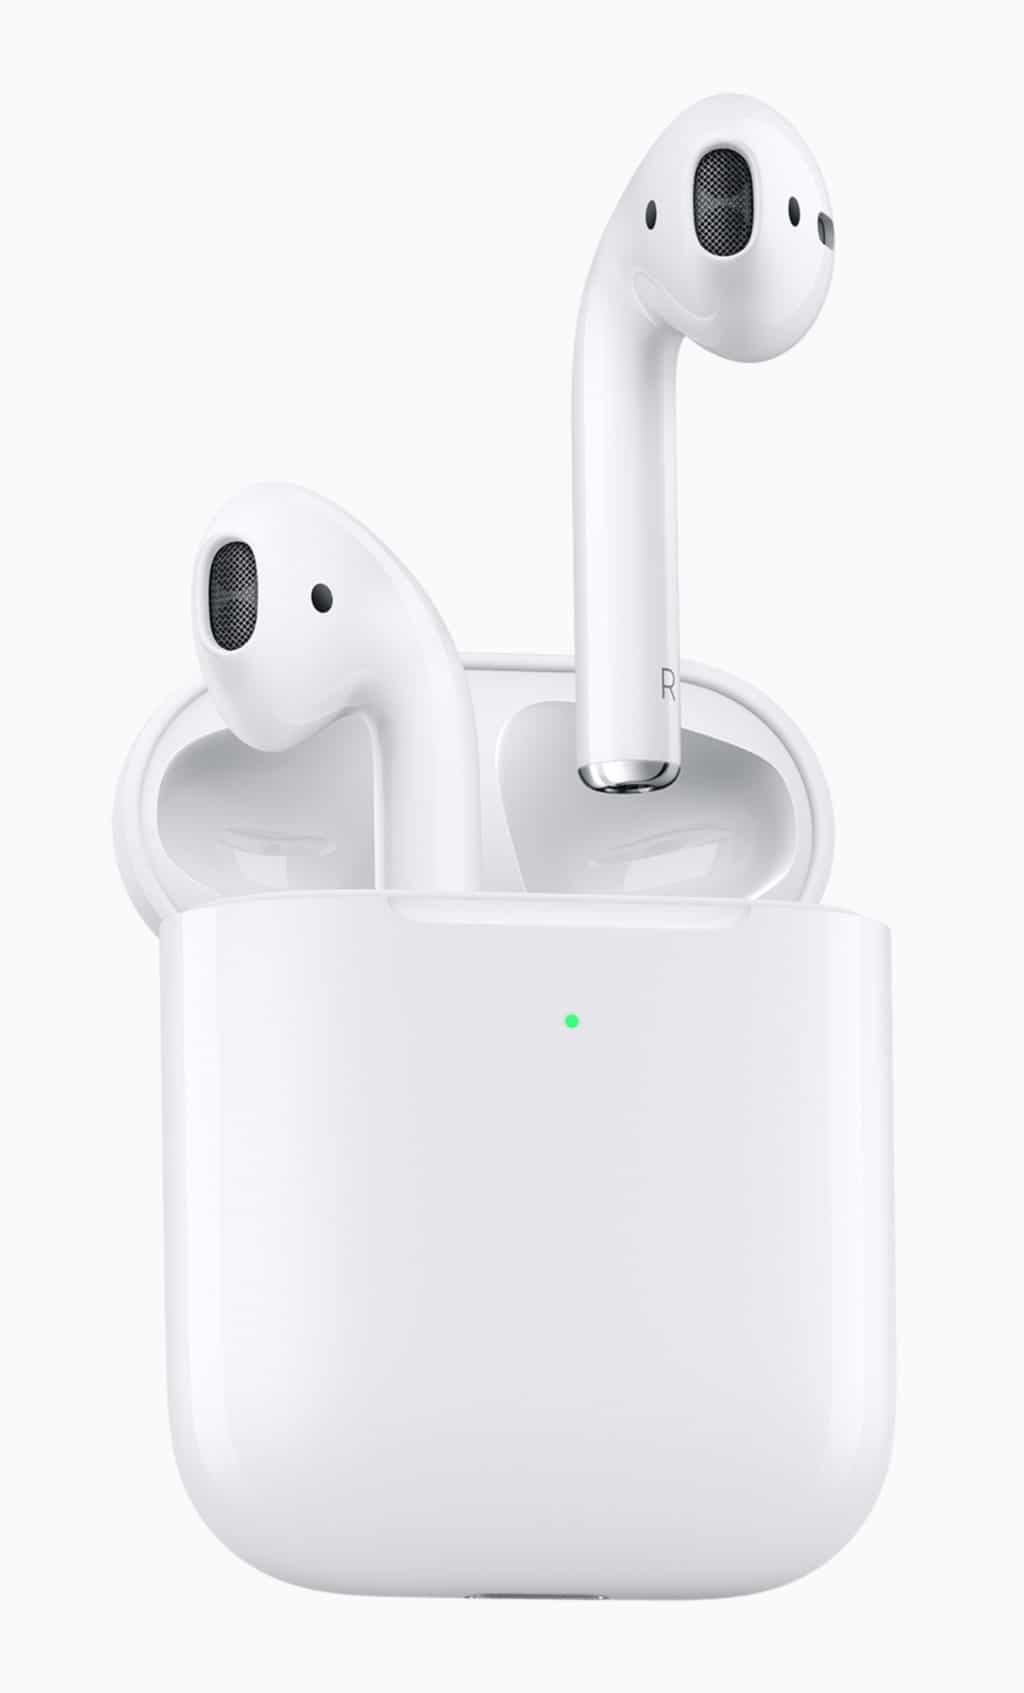 Apple-AirPods-worlds-most-popular-wireless-headphones_03202019